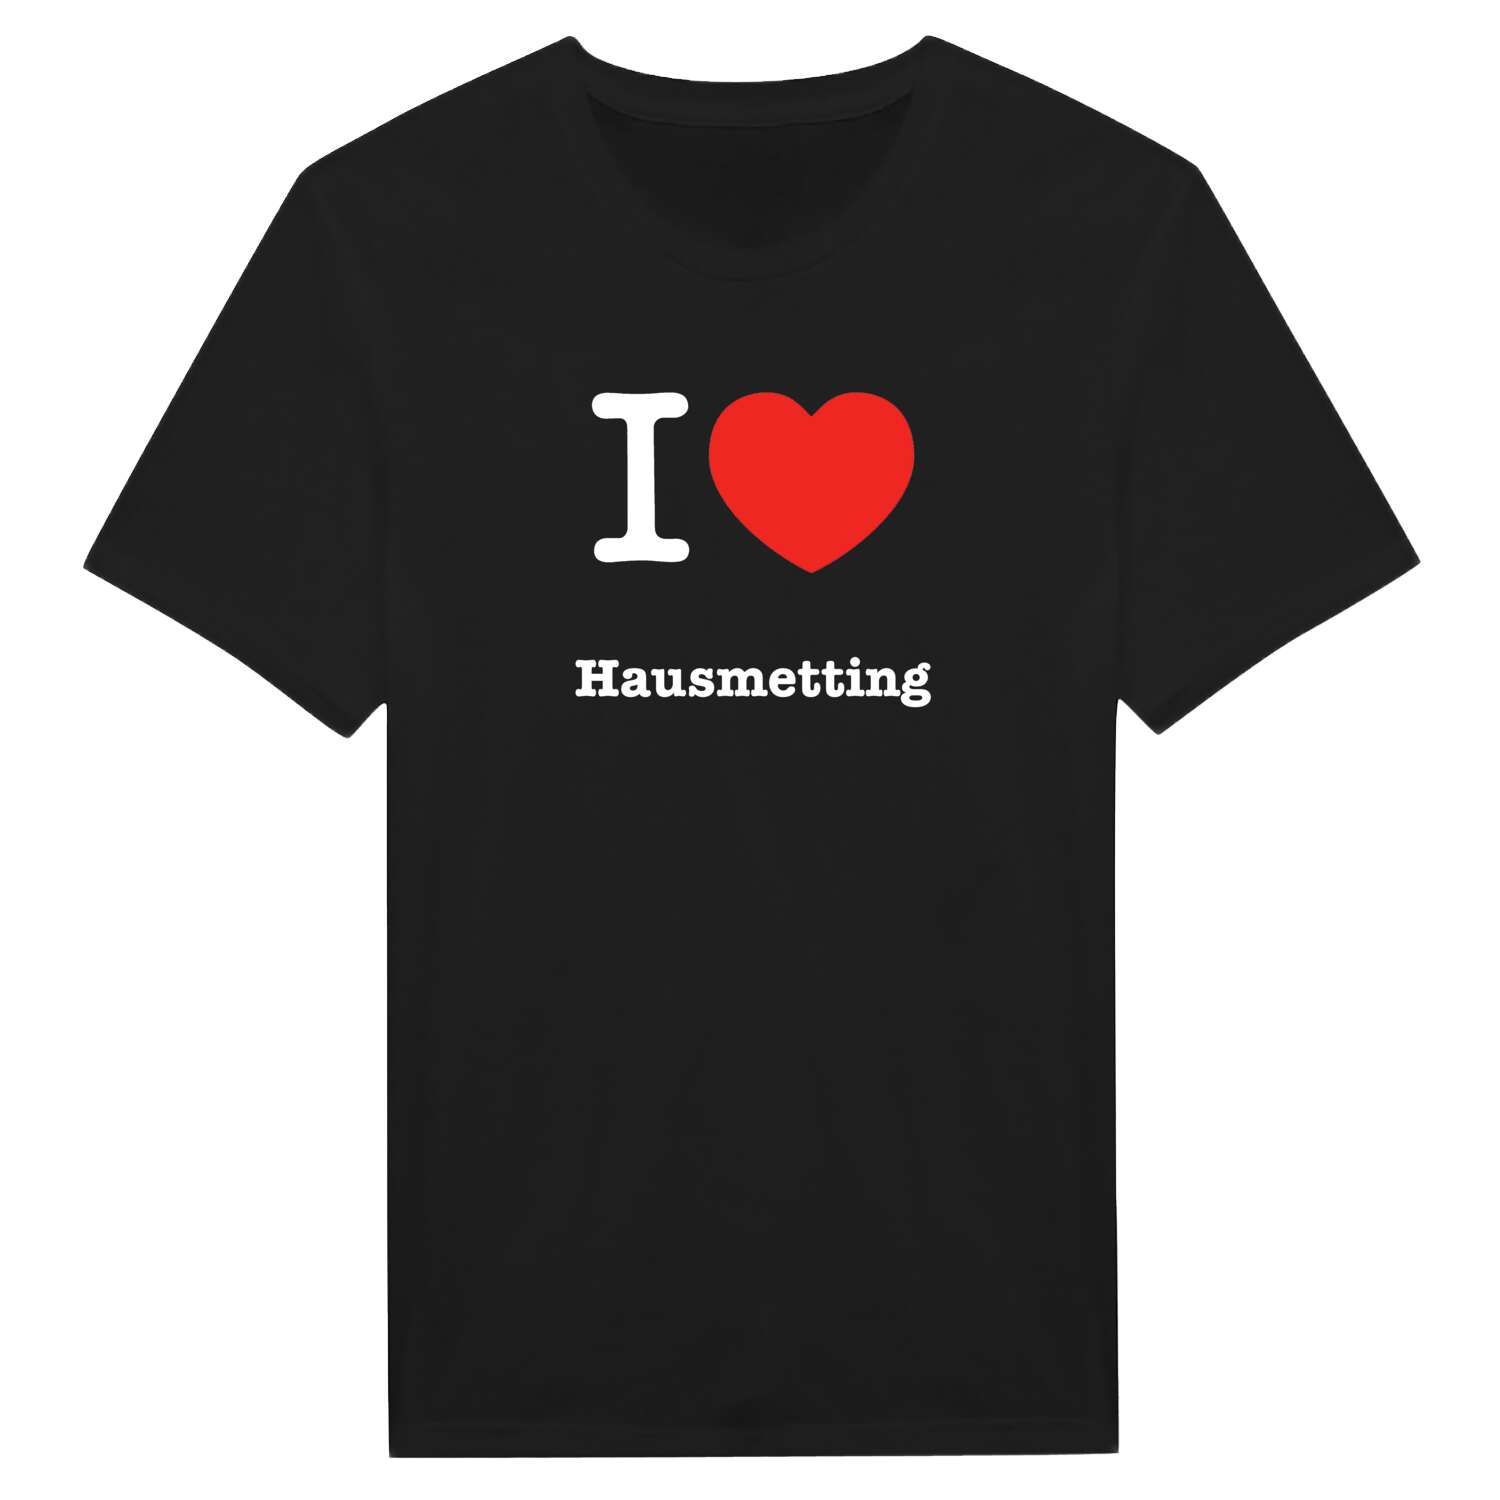 Hausmetting T-Shirt »I love«